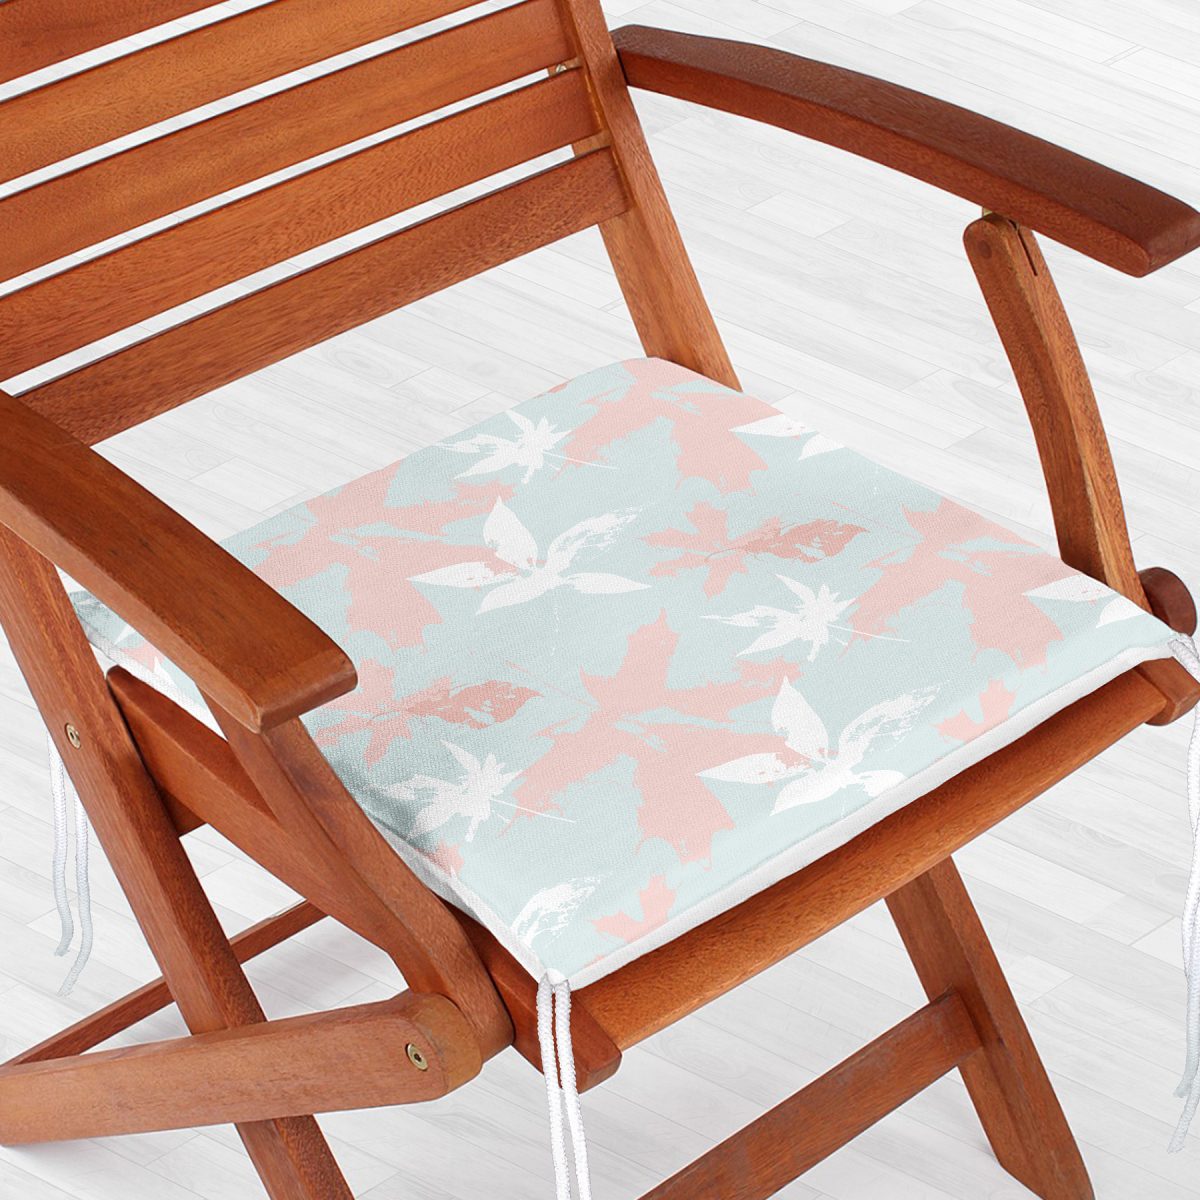 Renkli Zeminde Pembe Ve Beyaz Yaprak Motifli Dekoratif Fermuarlı Sandalye Minderi Realhomes